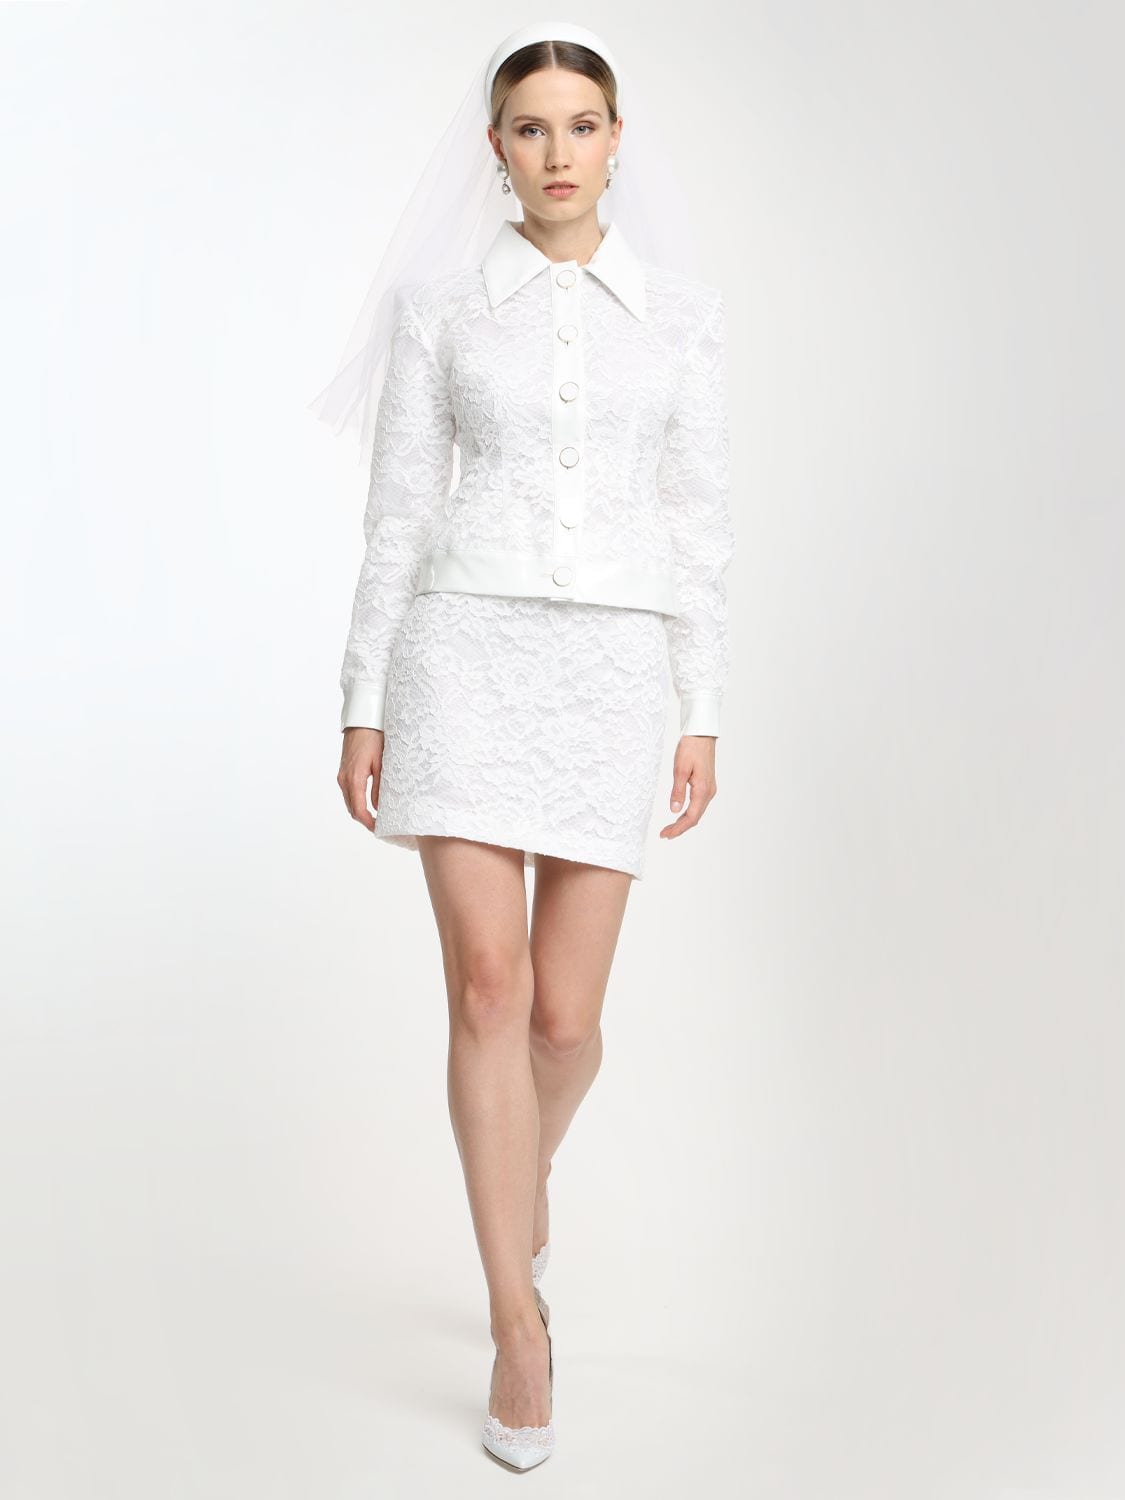 Rowen Rose Lvr Exclusive Lace & Vinyl Bridal Suit In White